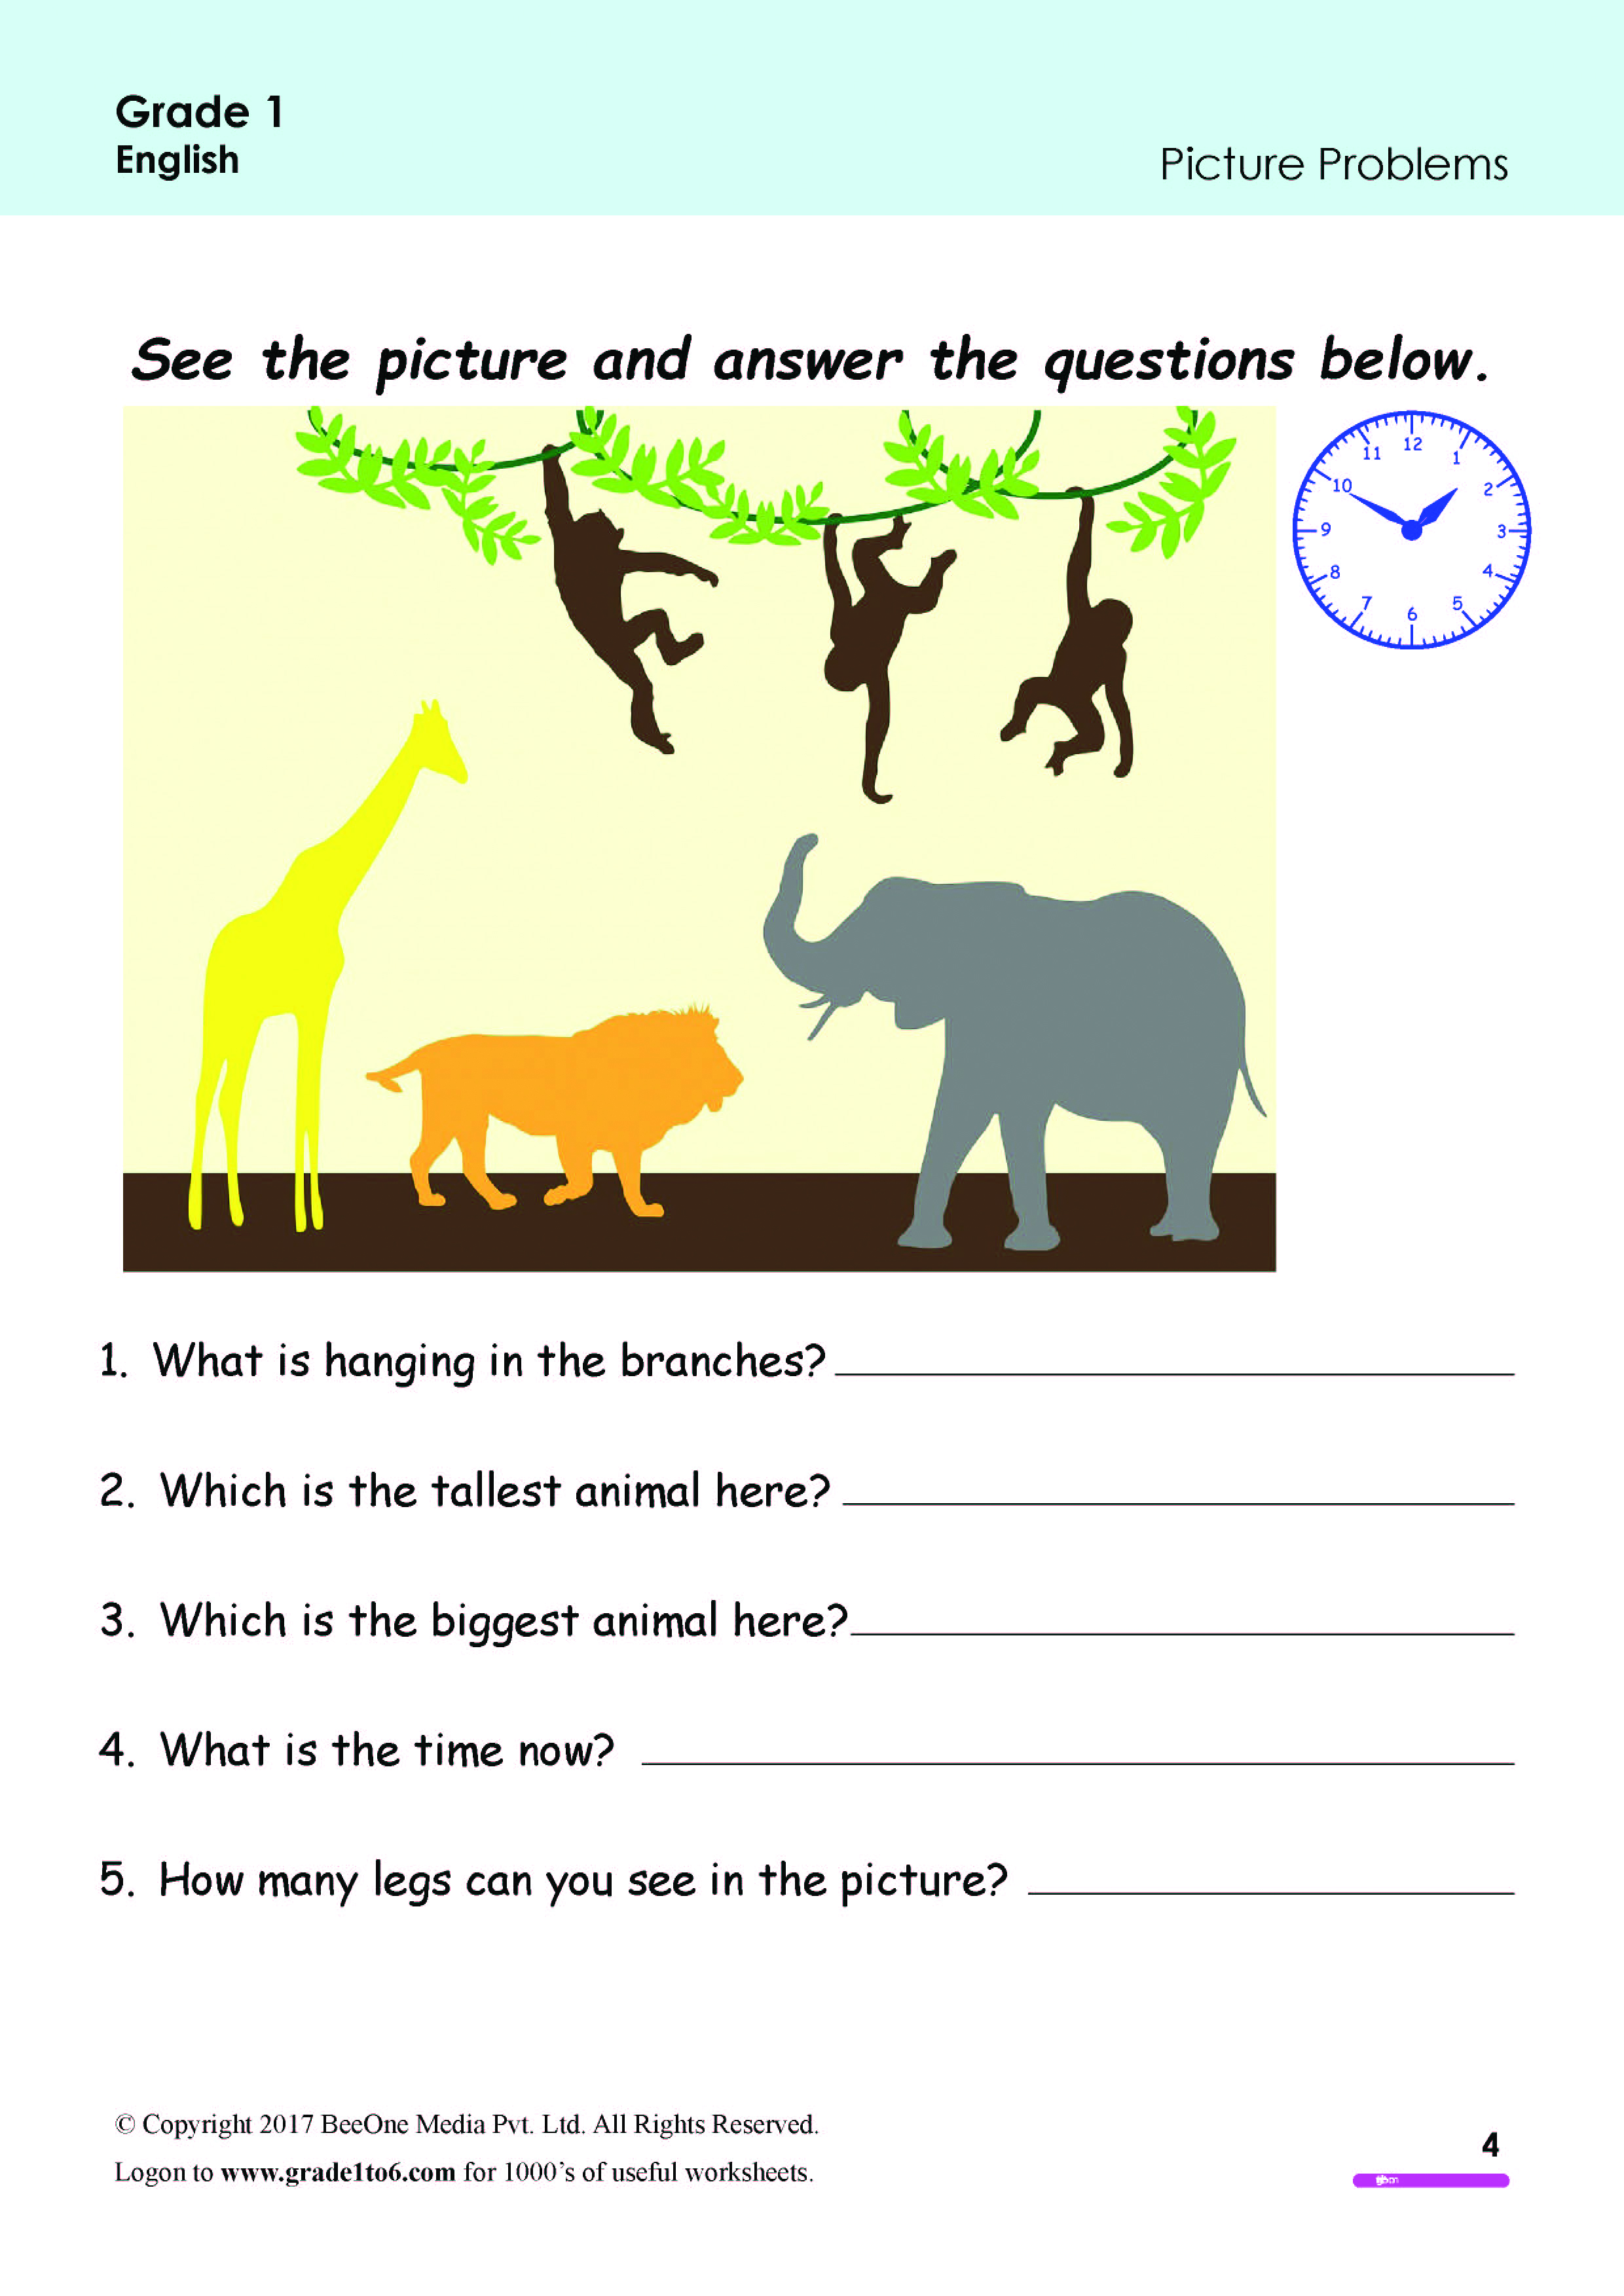 Picture Problem Worksheets for Grade 1|